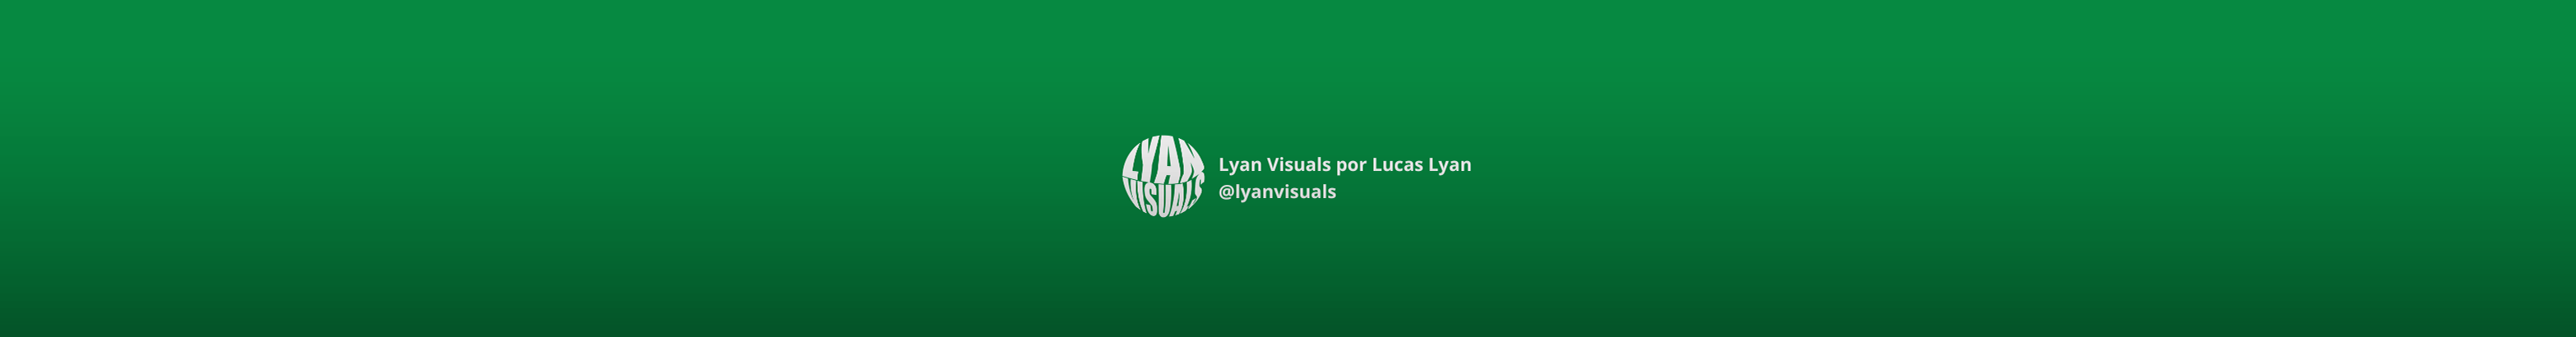 Lucas Lyan's profile banner